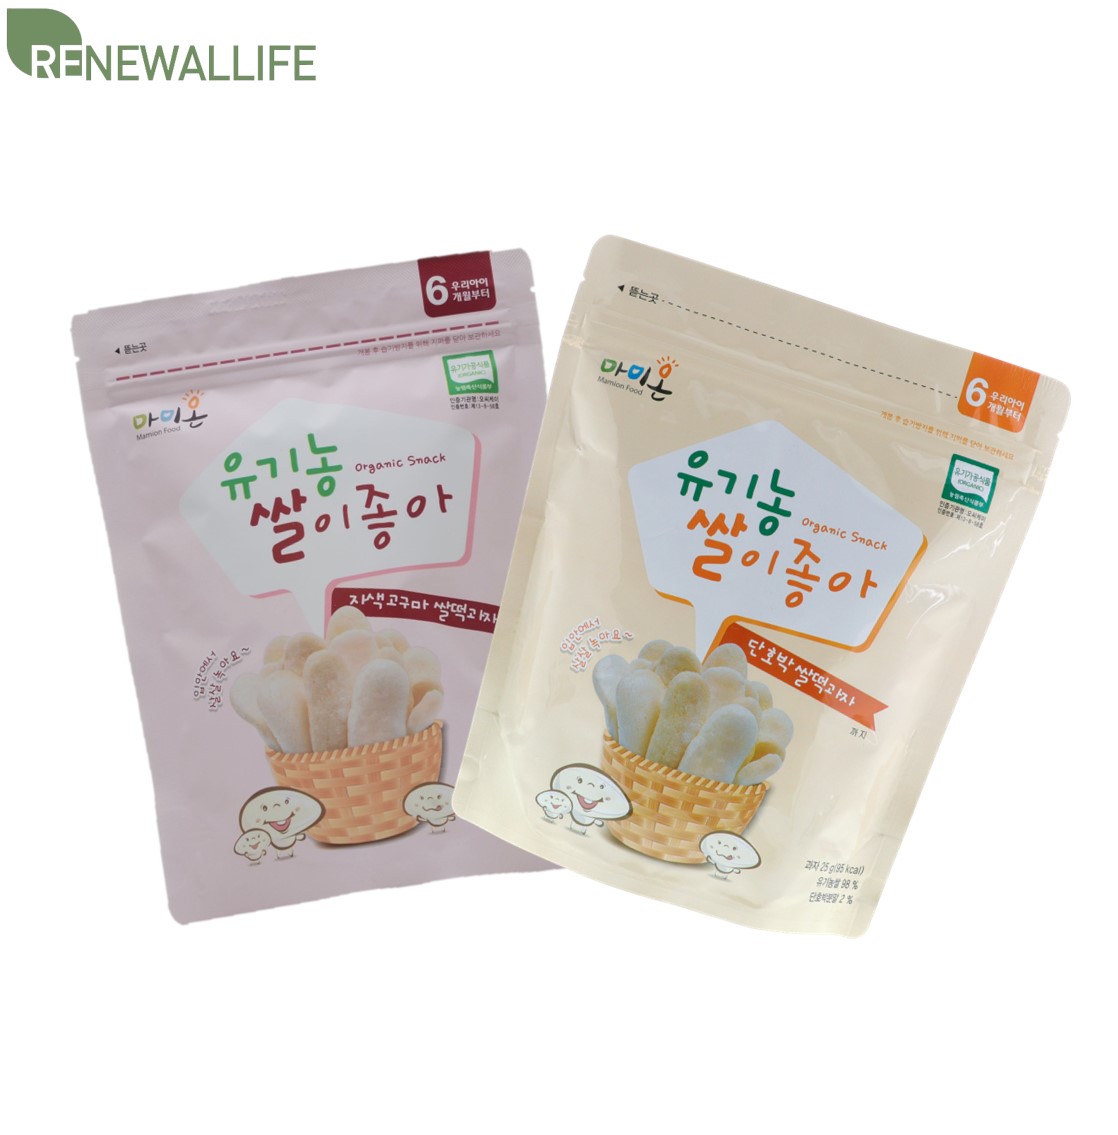 Renewallife I Like Organic Korean Baby Snacks